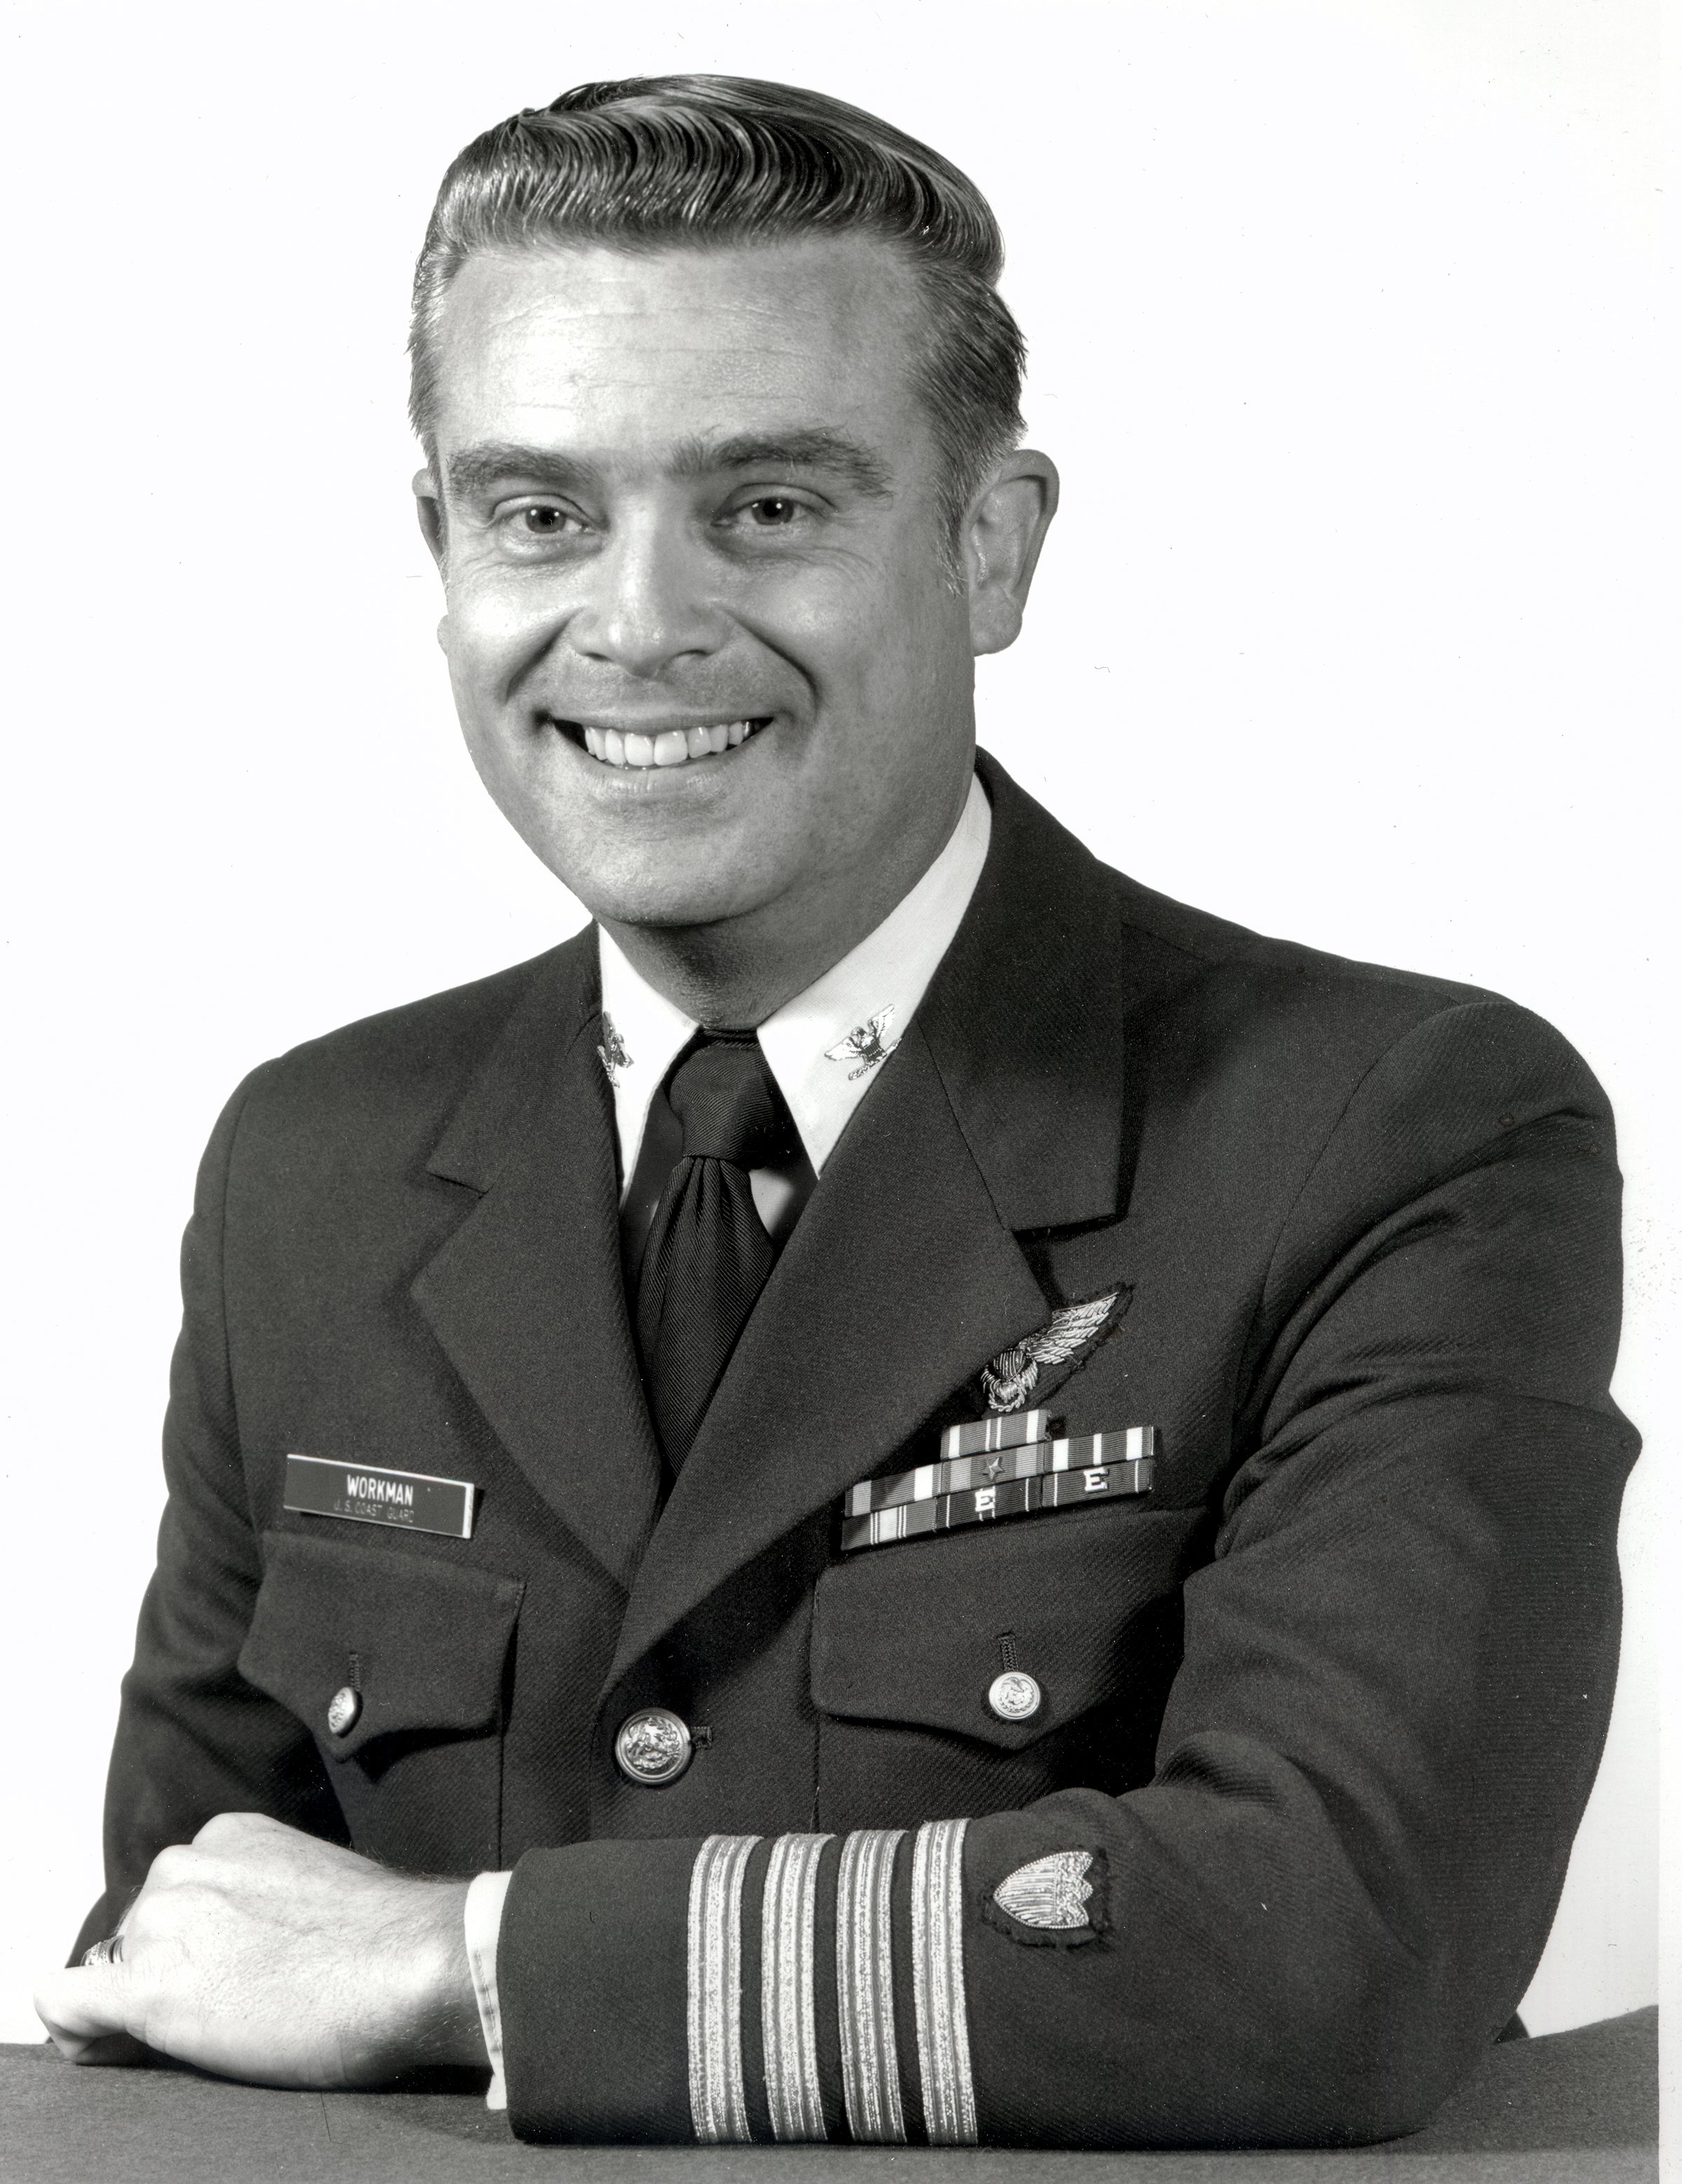 Portrait of Captain Robert B. Workman, U.S. Coast Guard (Retired)